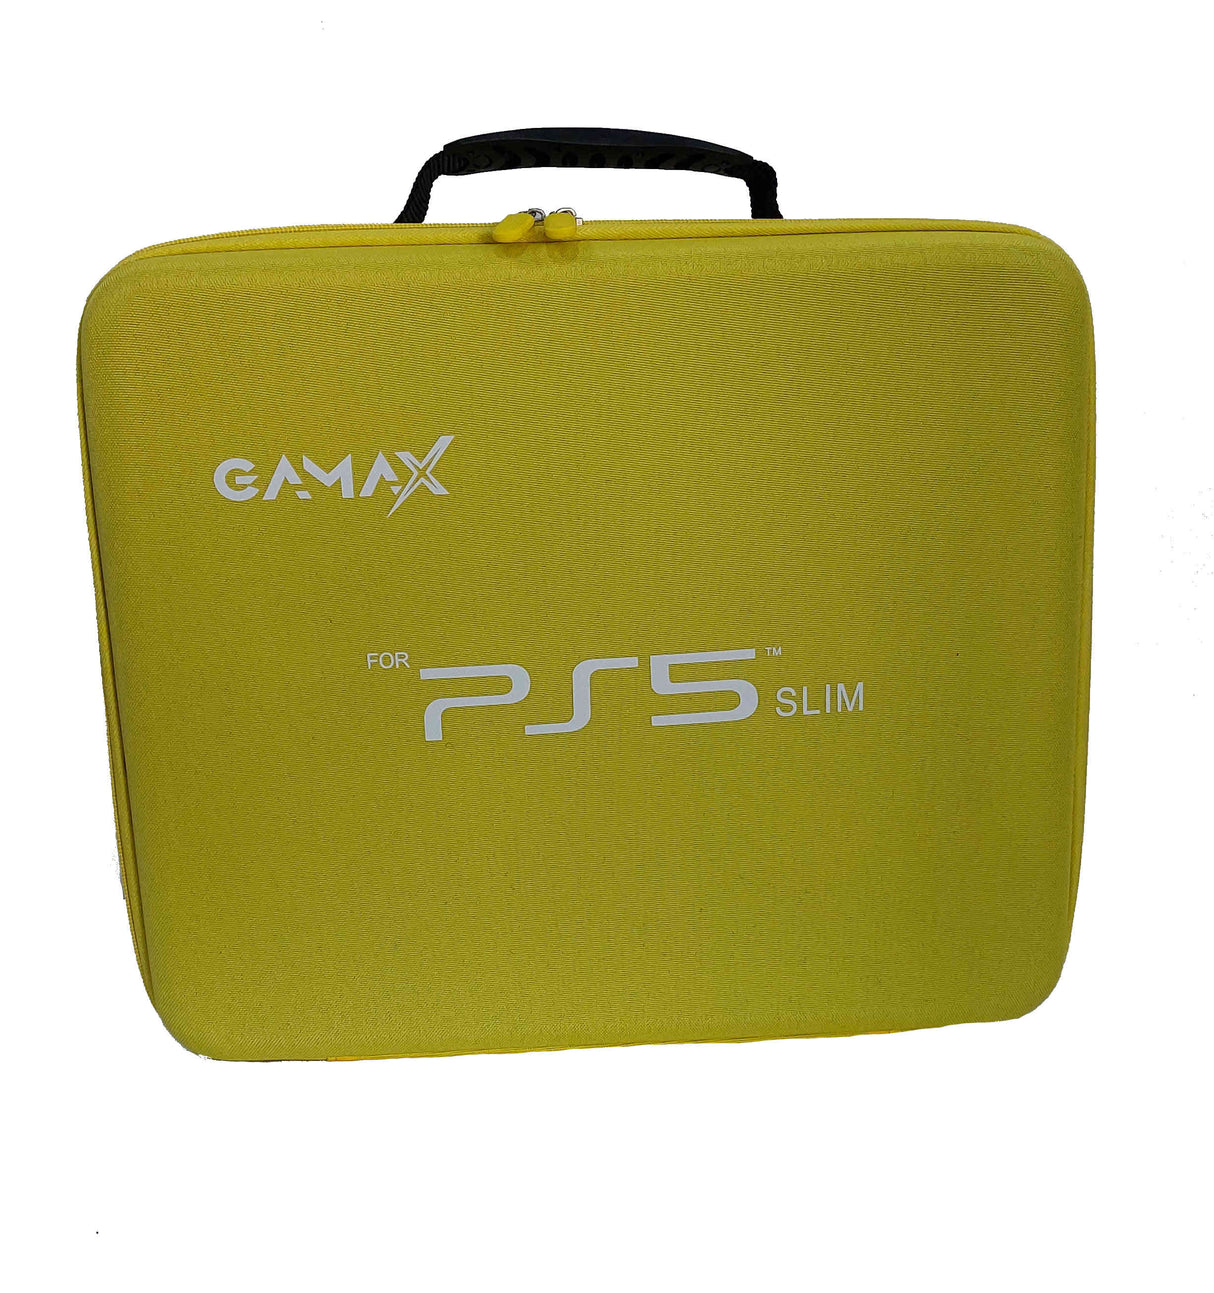 Gamax Storage Bag For Playstation 5 Slim - Yellow